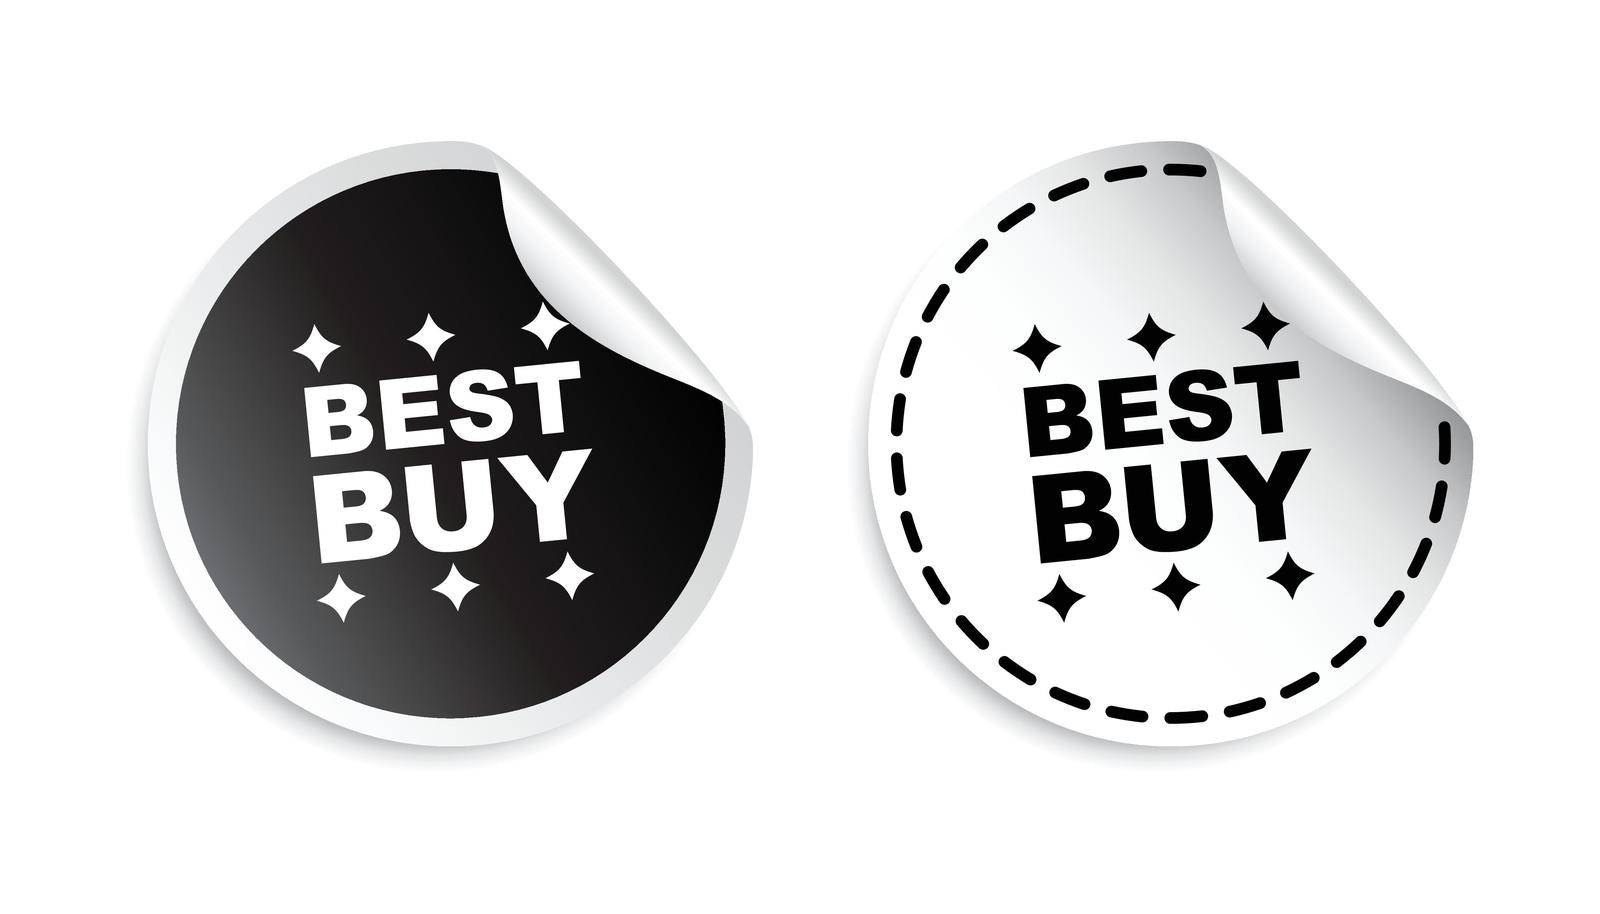 Best buy sticker. Black and white vector illustration.